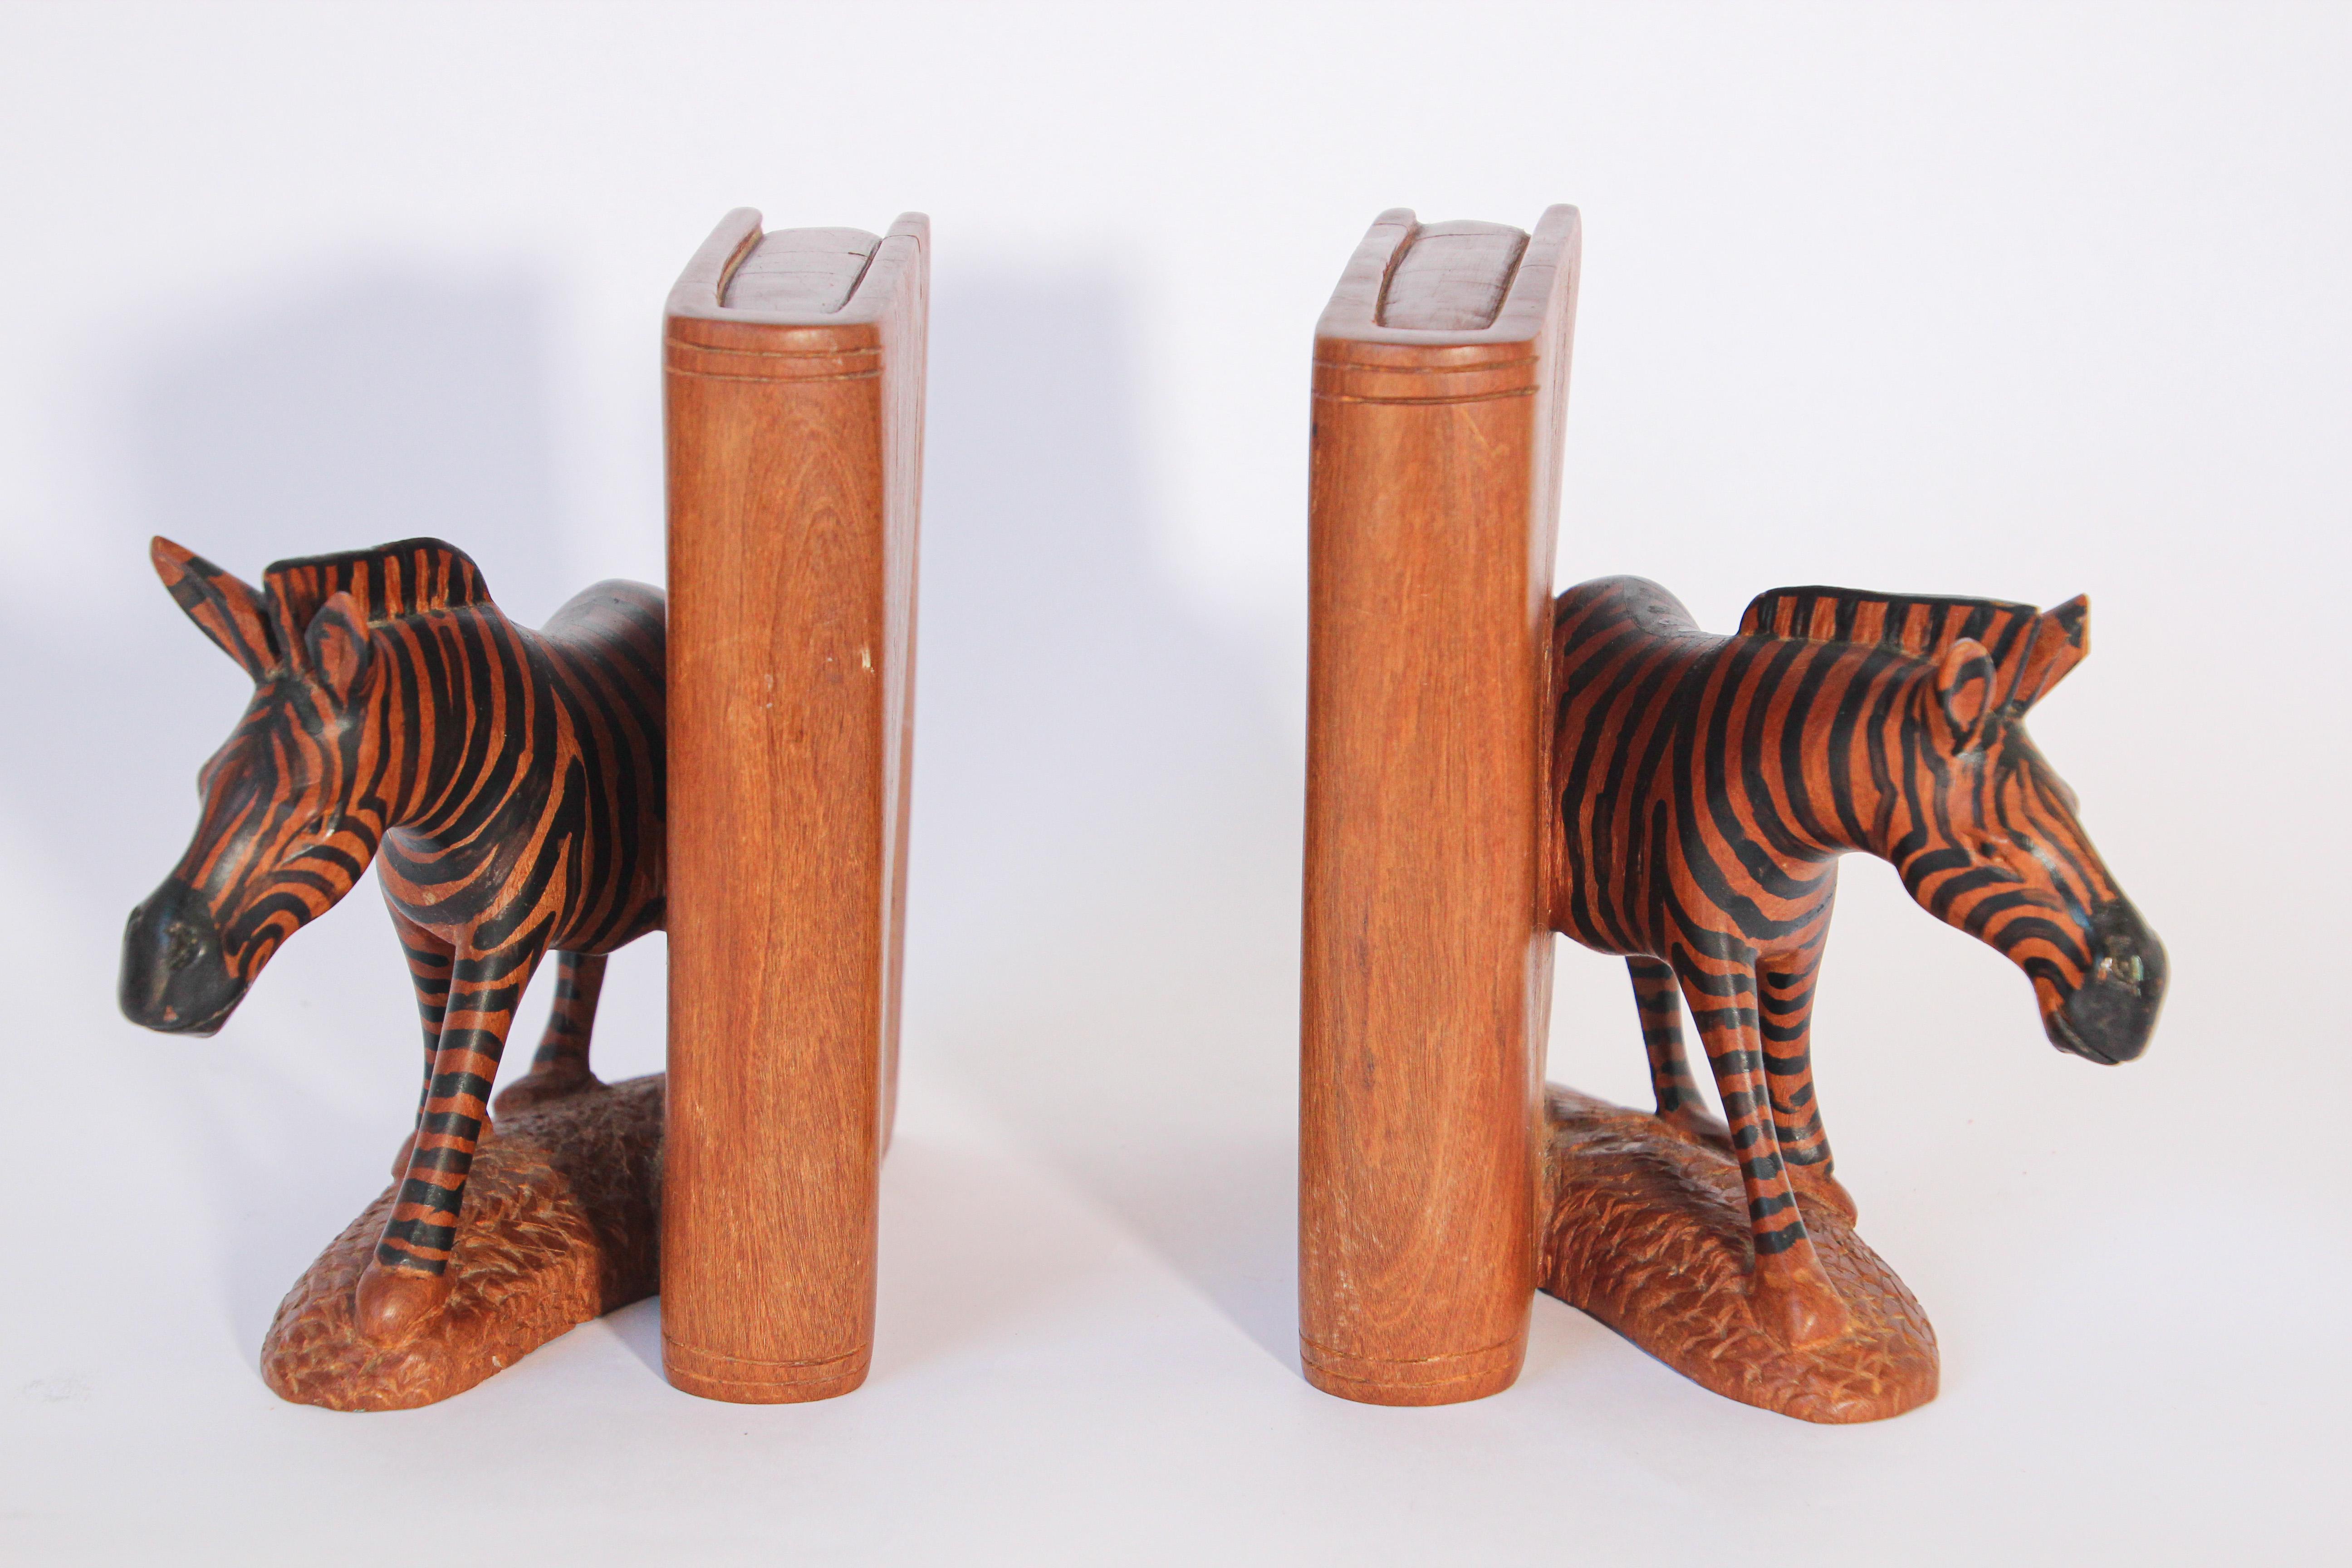 Hardwood Hand Carved African Zebra Bookends For Sale